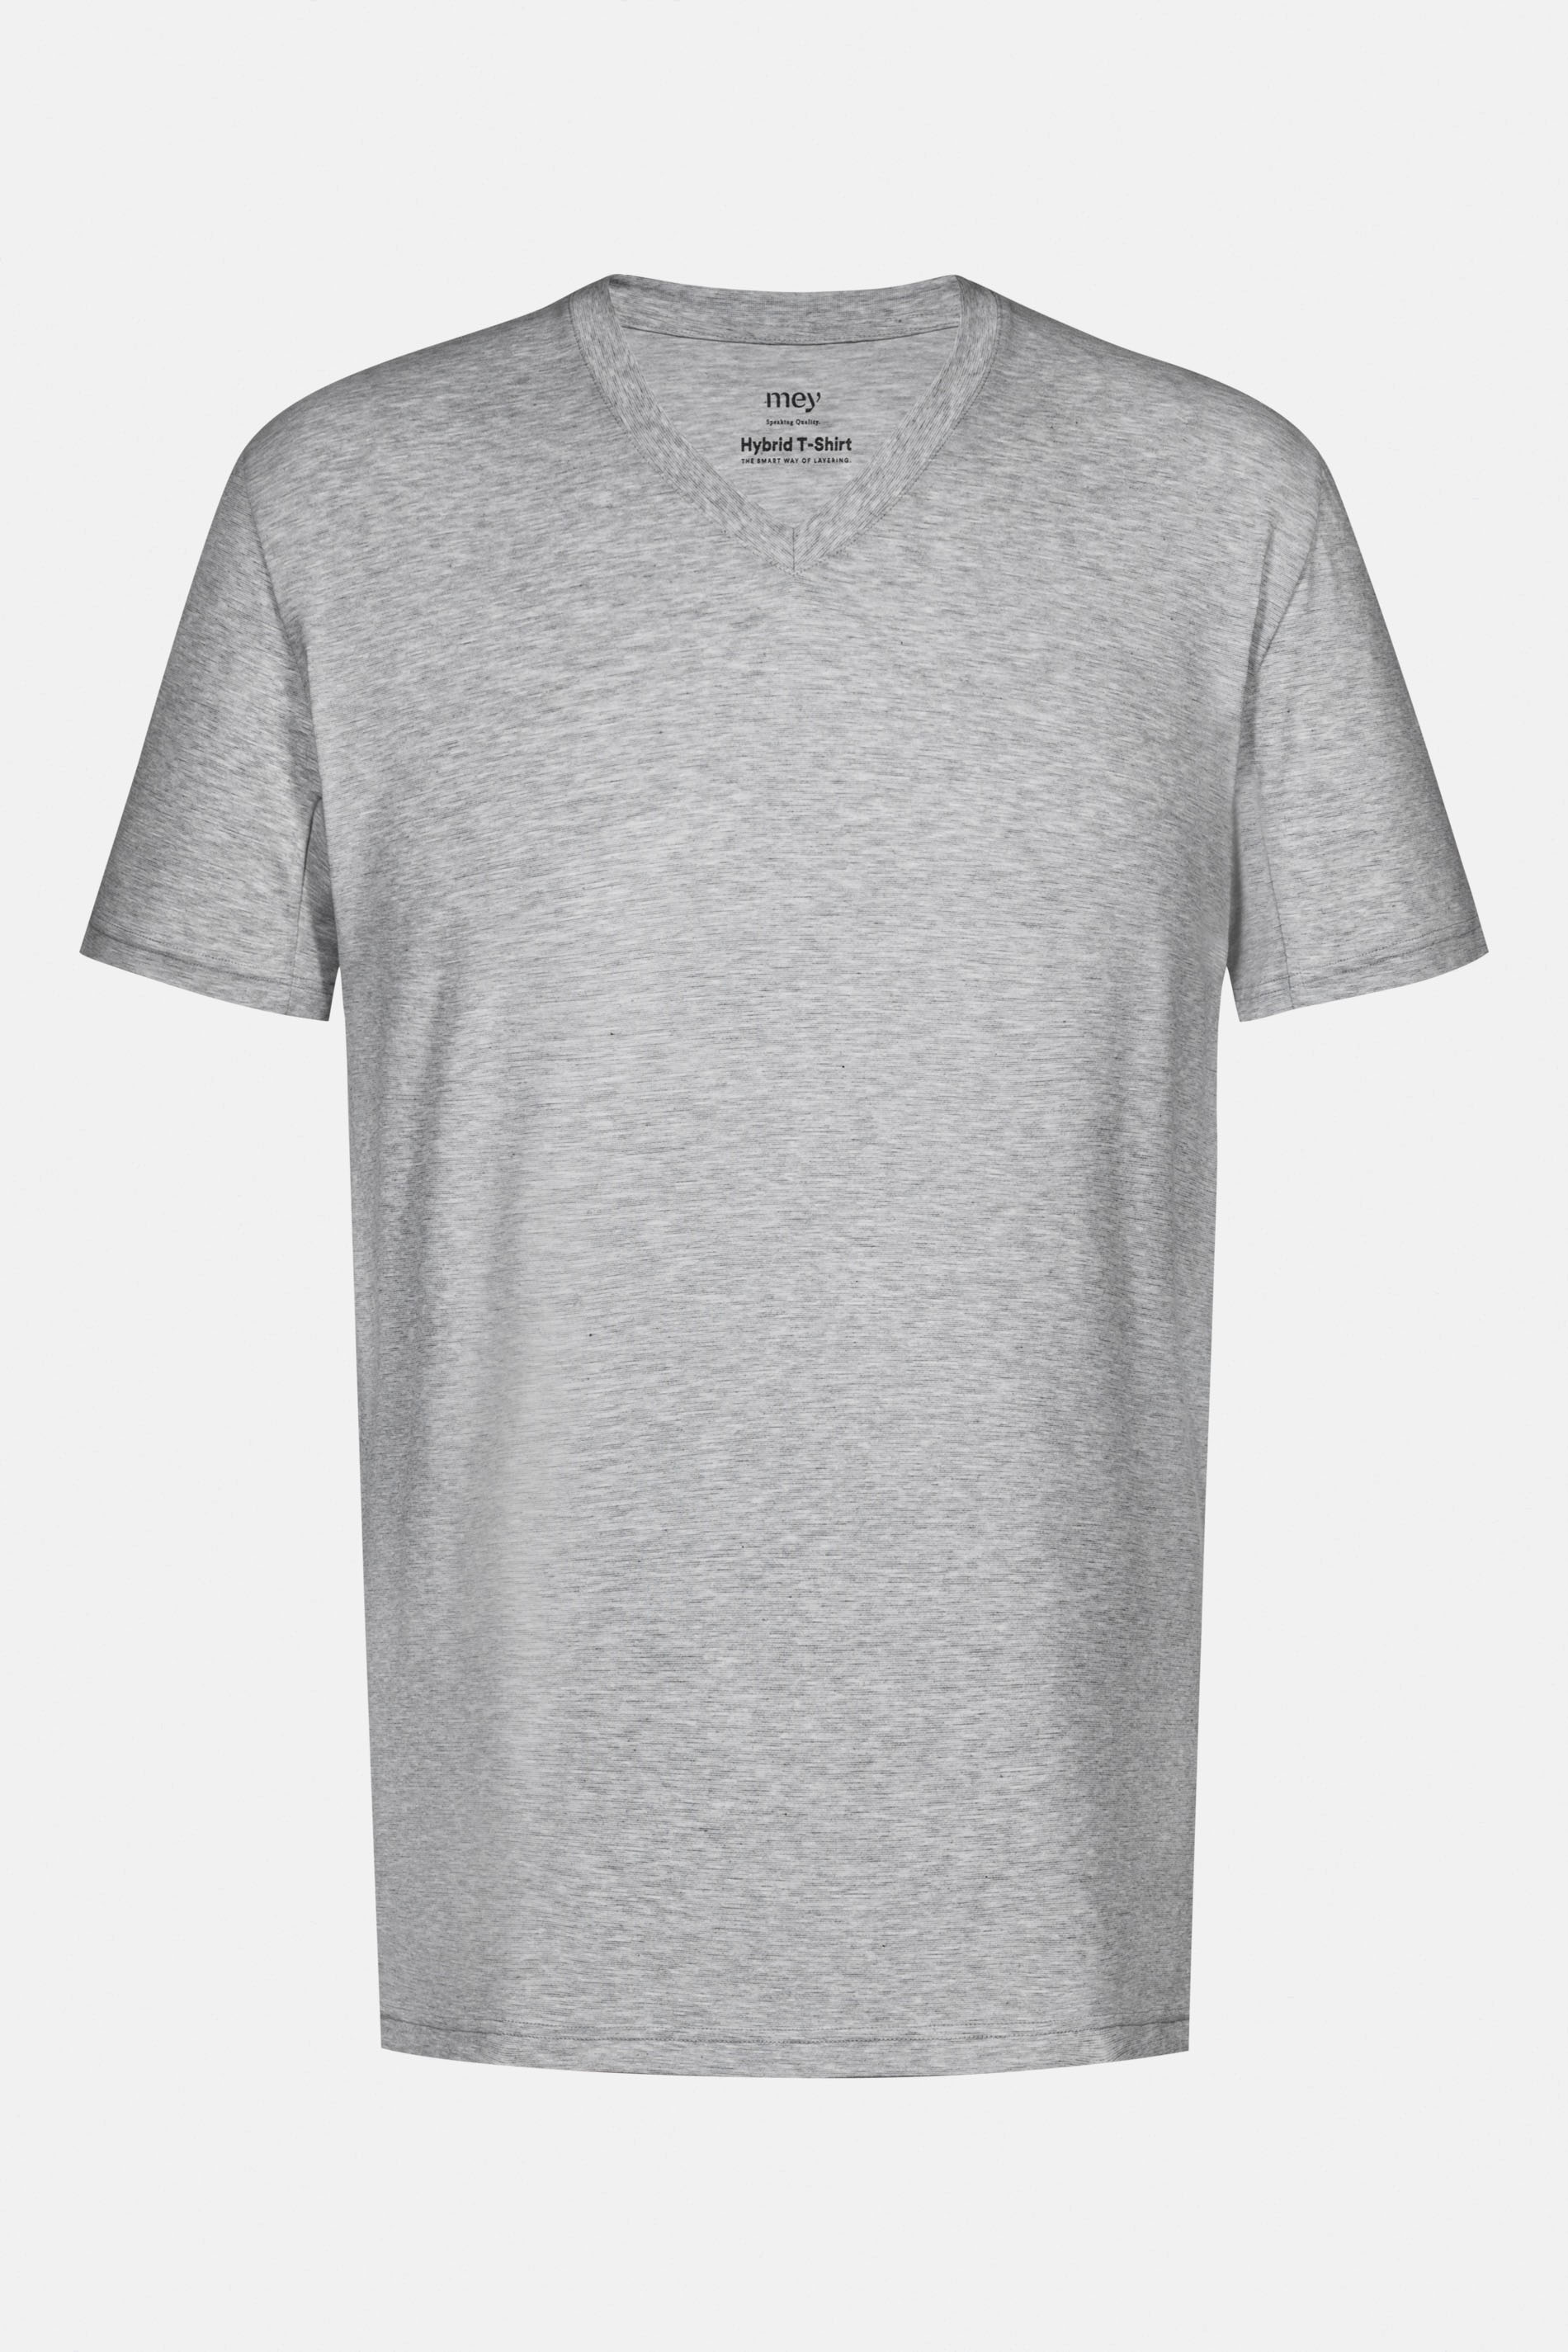 Hybrid T-shirt Light Grey Melange Serie Hybrid T-Shirt Cut Out | mey®